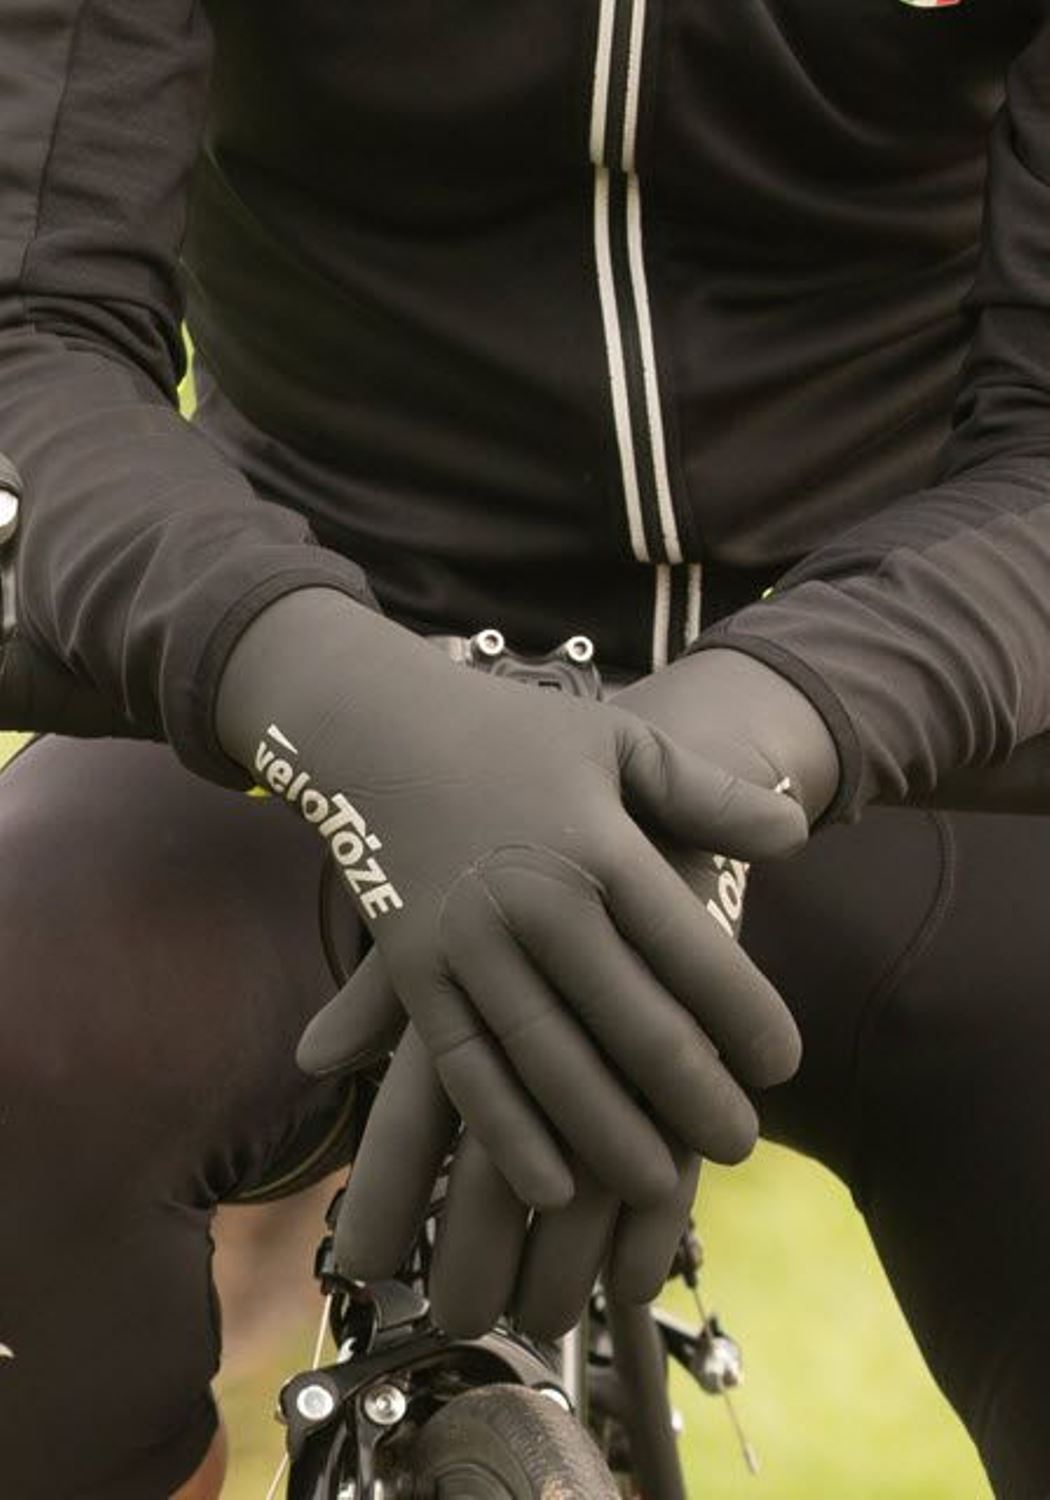 veloToze Waterproof Cycling Gloves